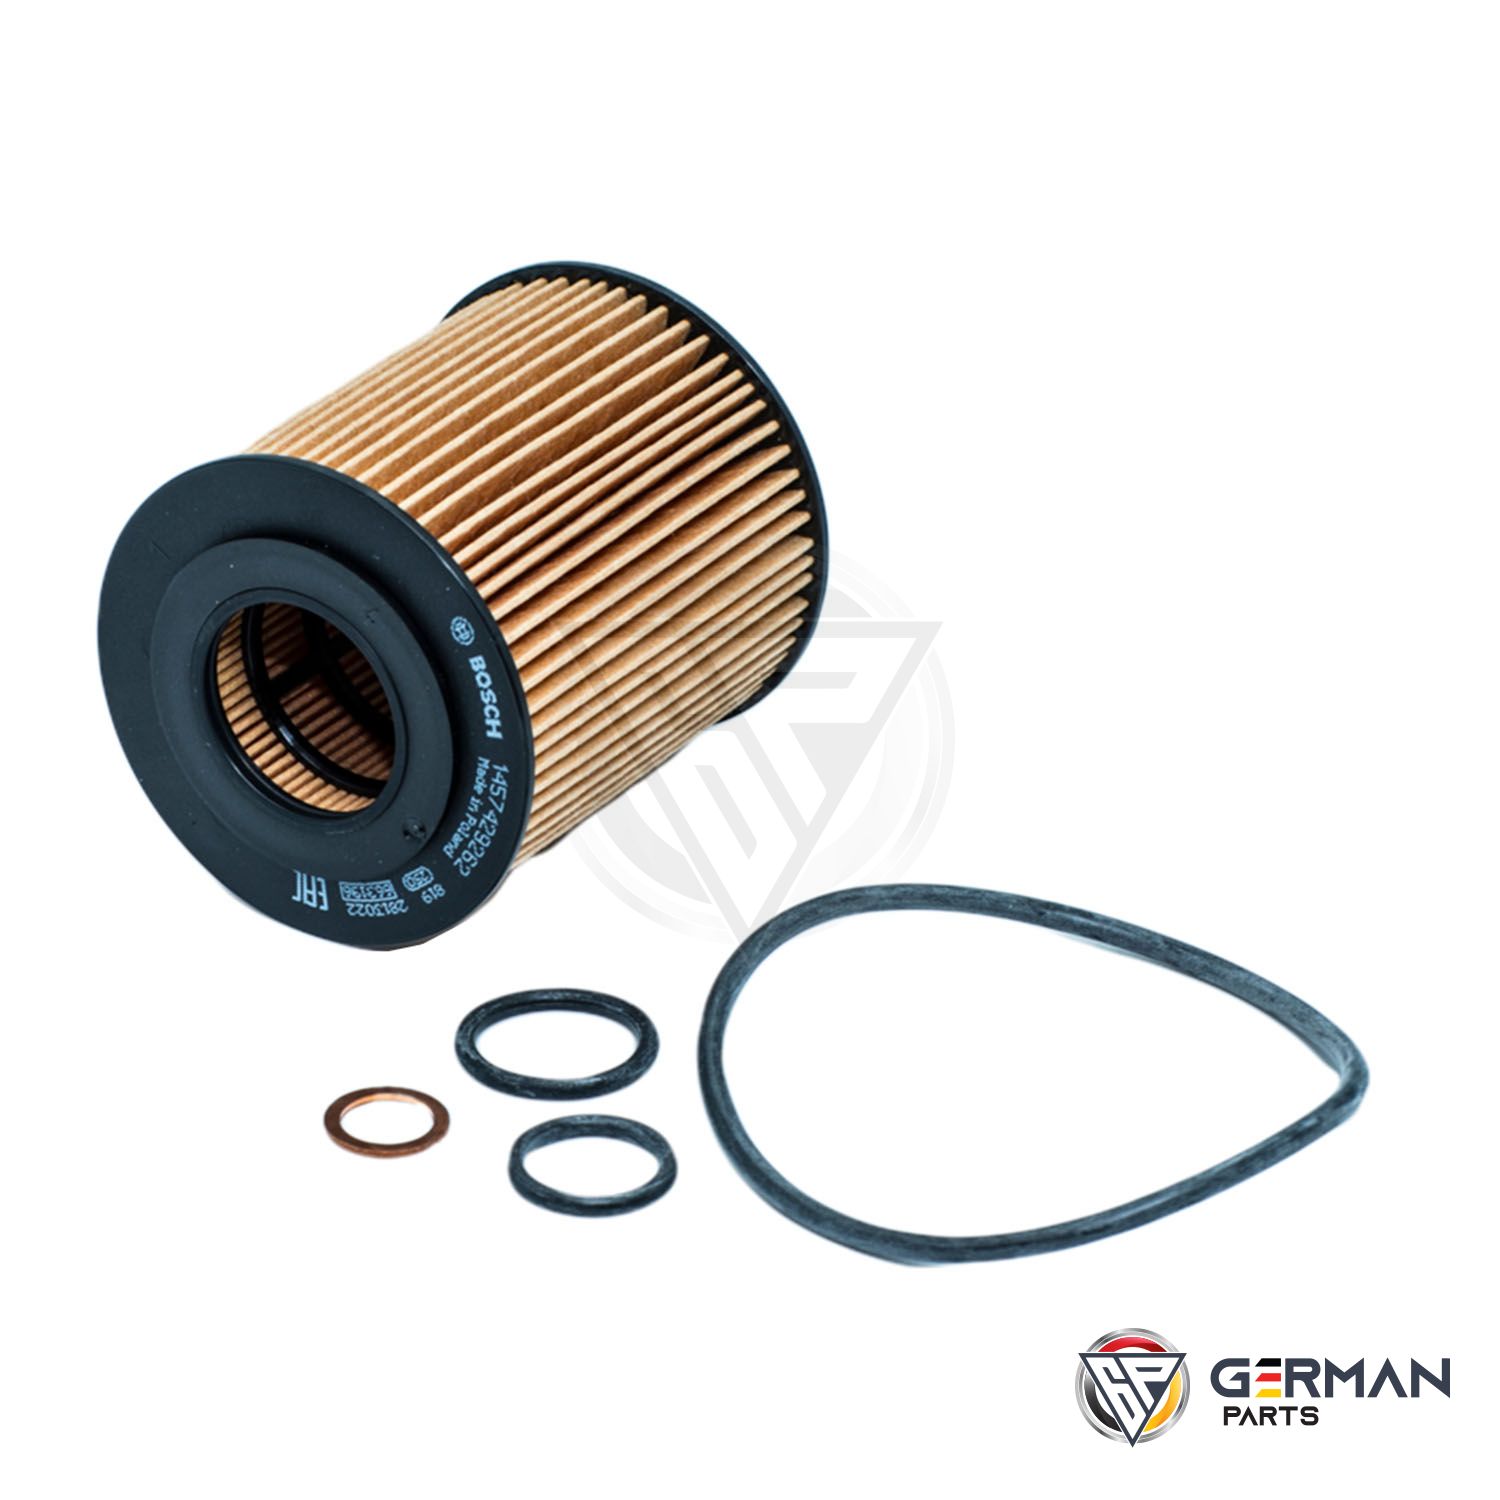 Buy Bosch Oil Filter 11427508969 - German Parts